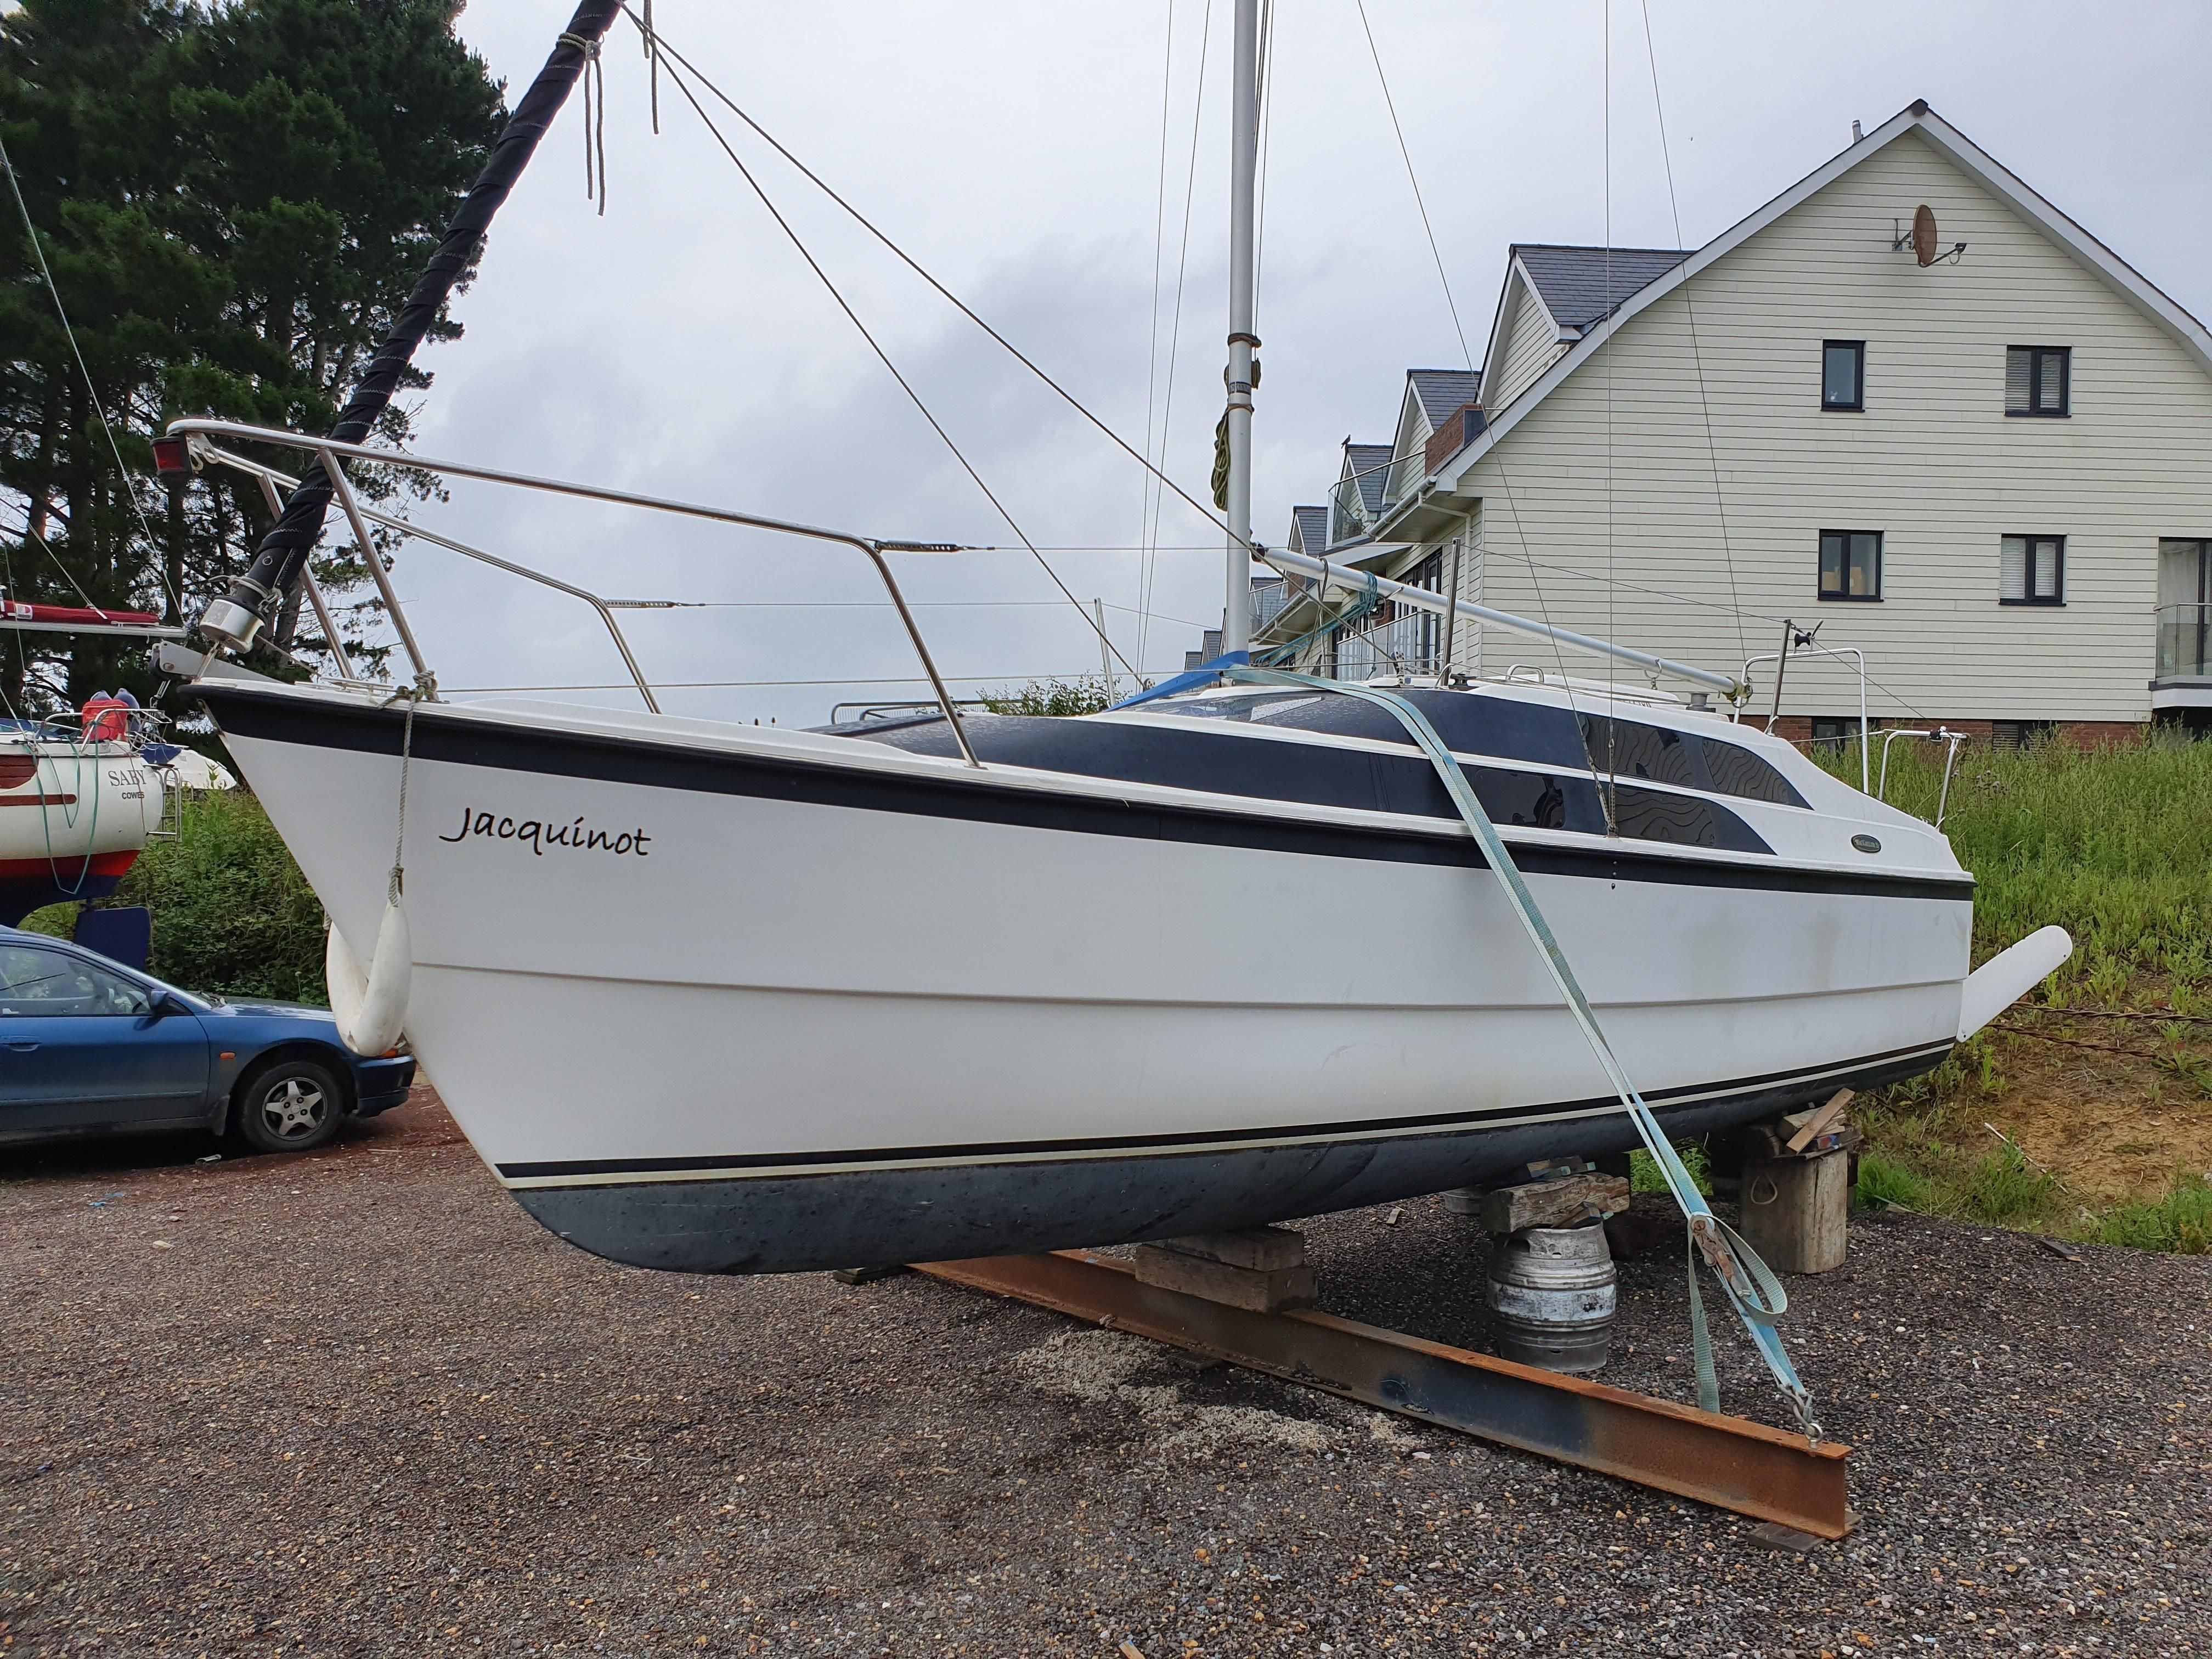 26 foot macgregor sailboat for sale